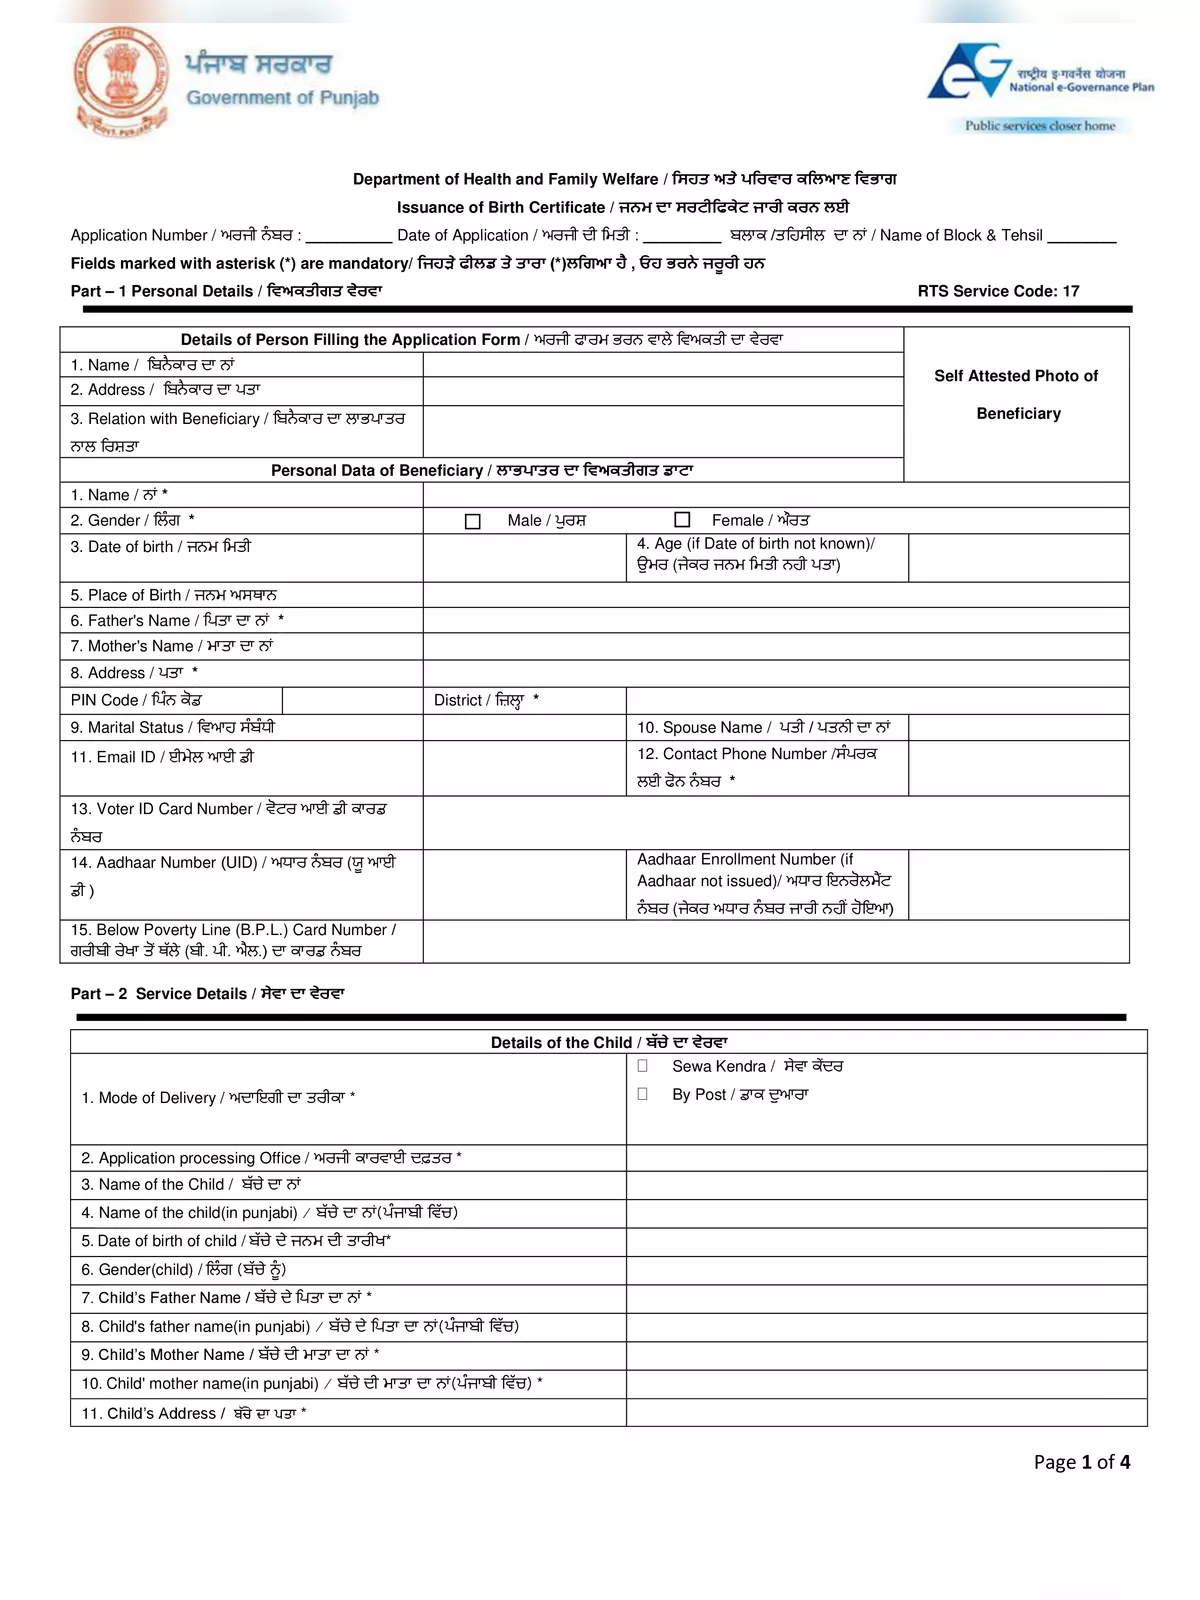 Punjab Birth Certificate Form